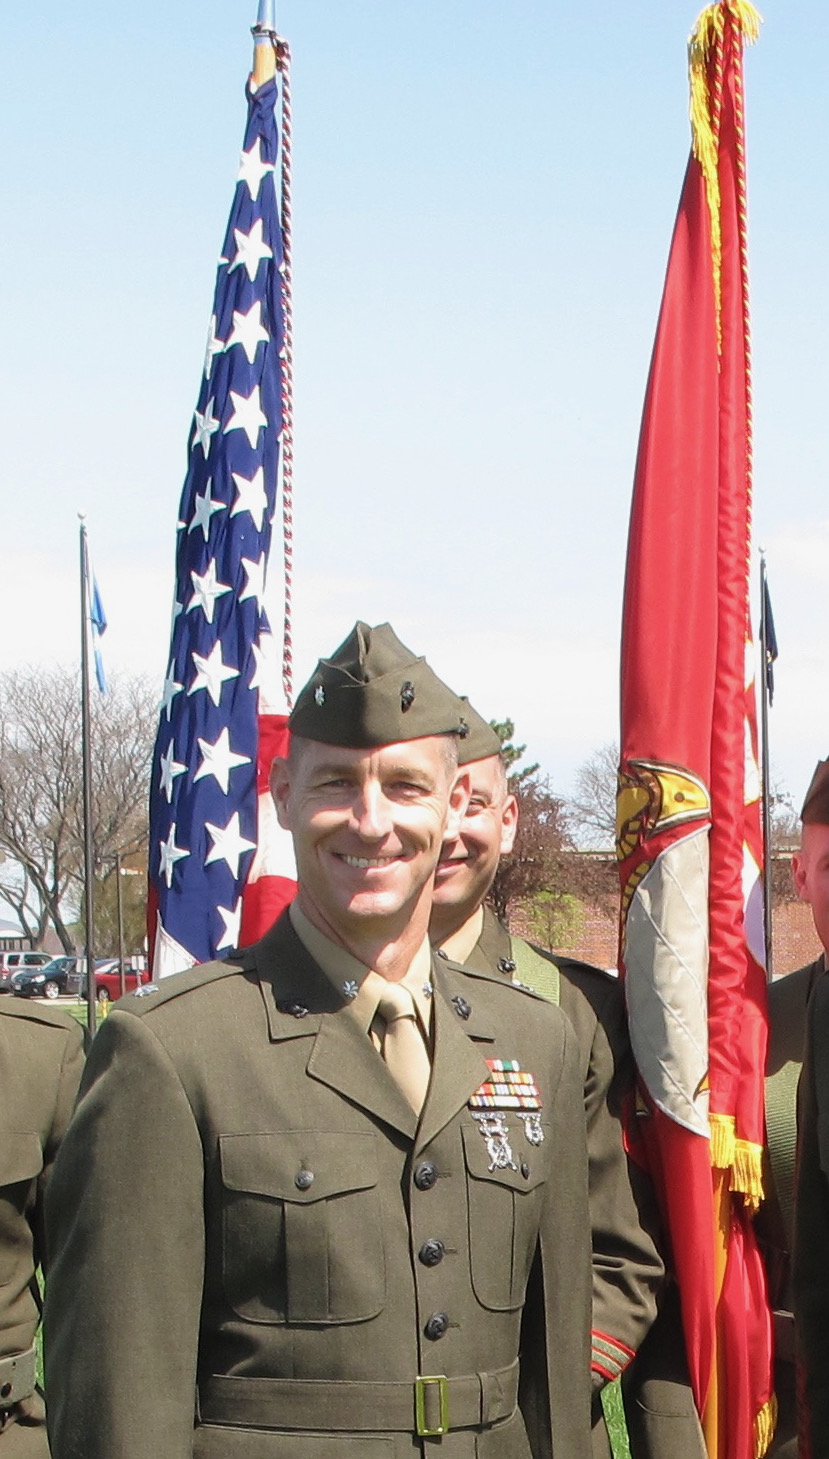 Kyle Dewar standing next to flags